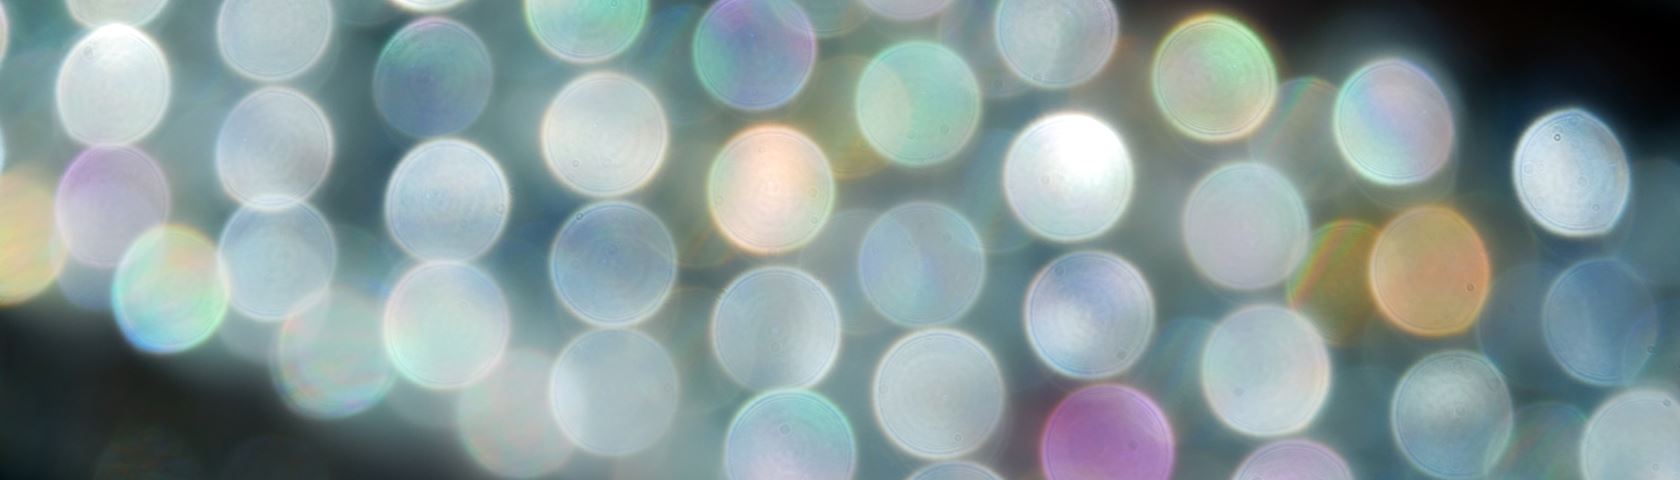 Blurry Glass Beads